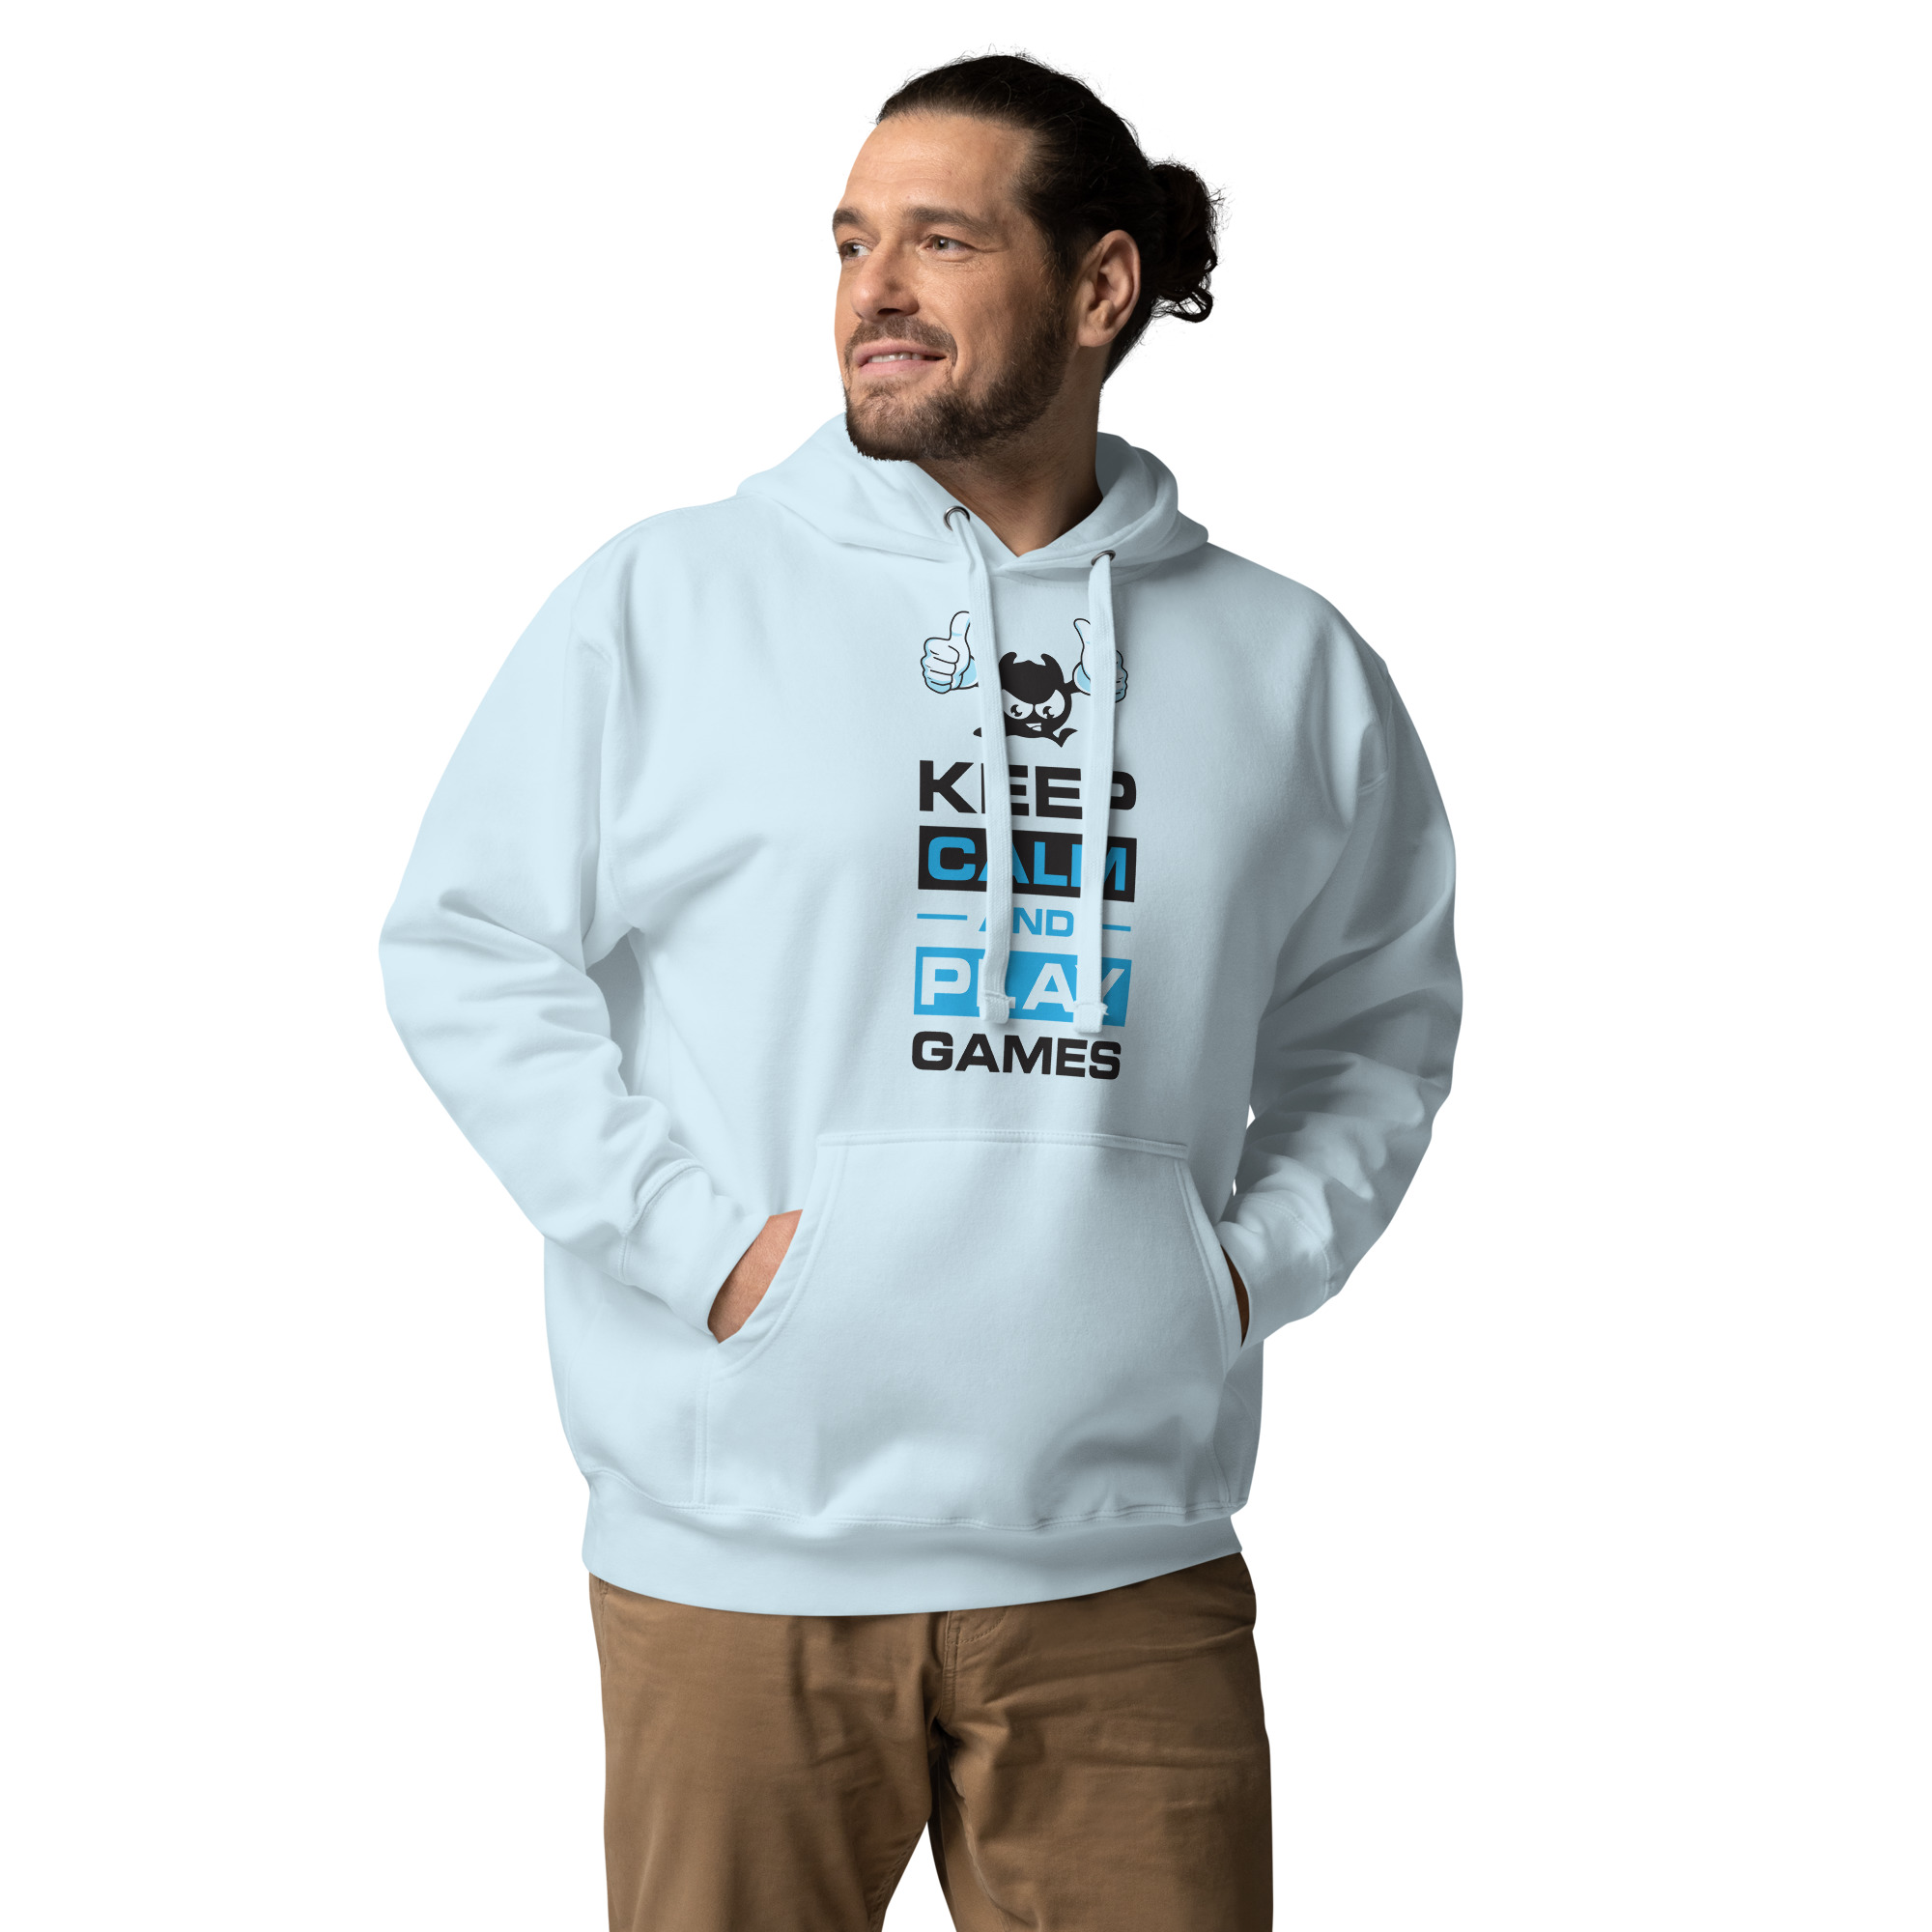 unisex-premium-hoodie-sky-blue-front-663dbf645eea6.jpg